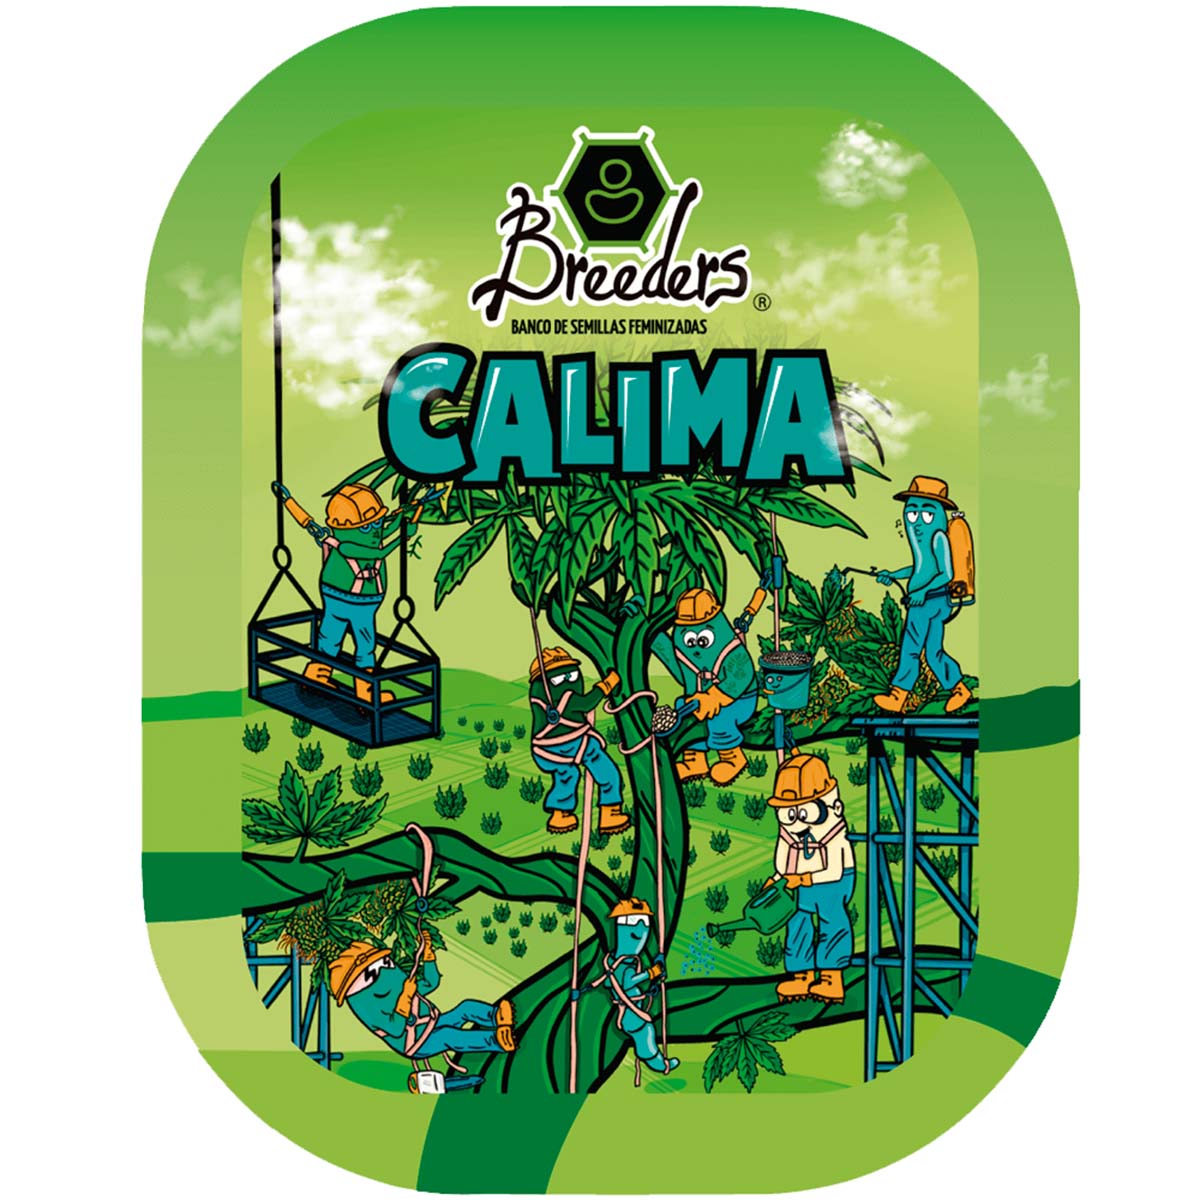 Calima Feminizada Breeders Pack X3